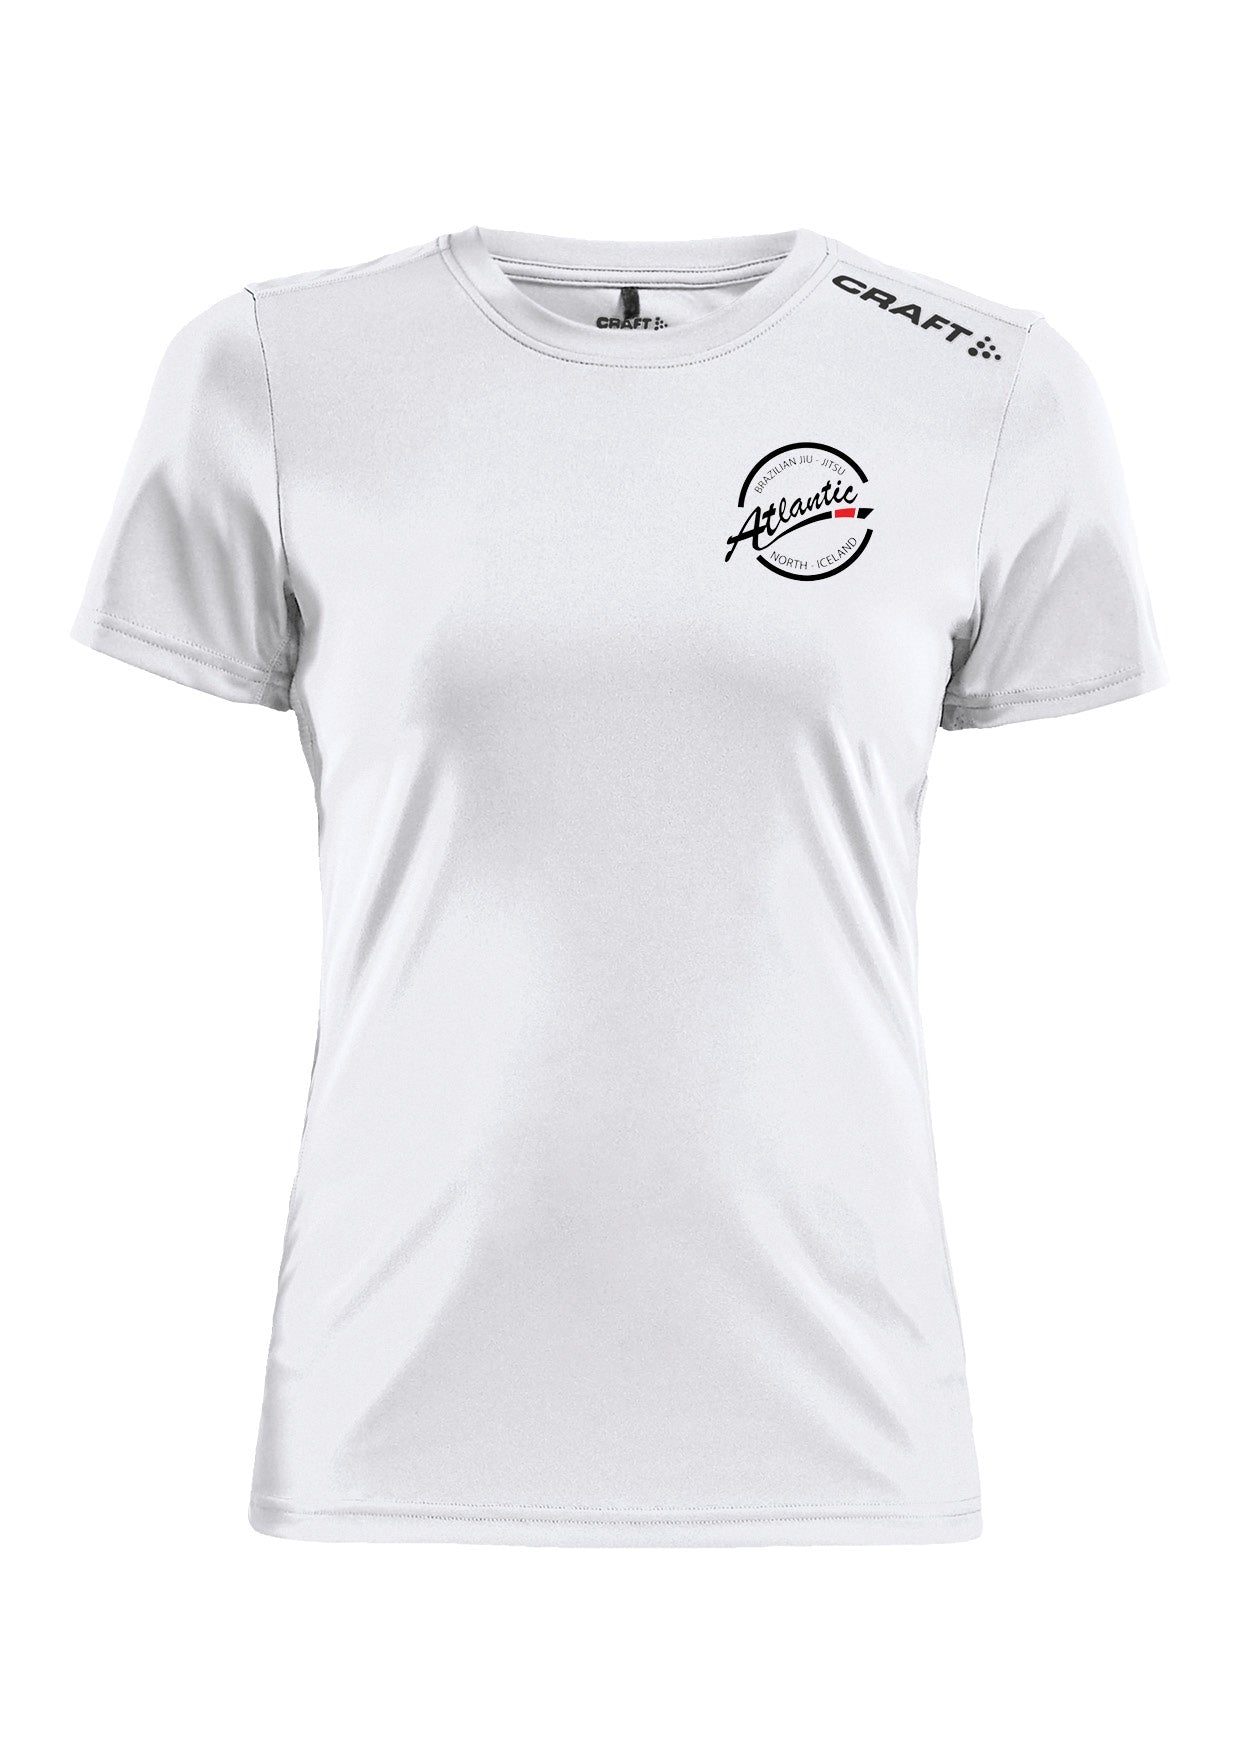 Atlantic Jiu Jitsu -  Casual Sport T-shirt